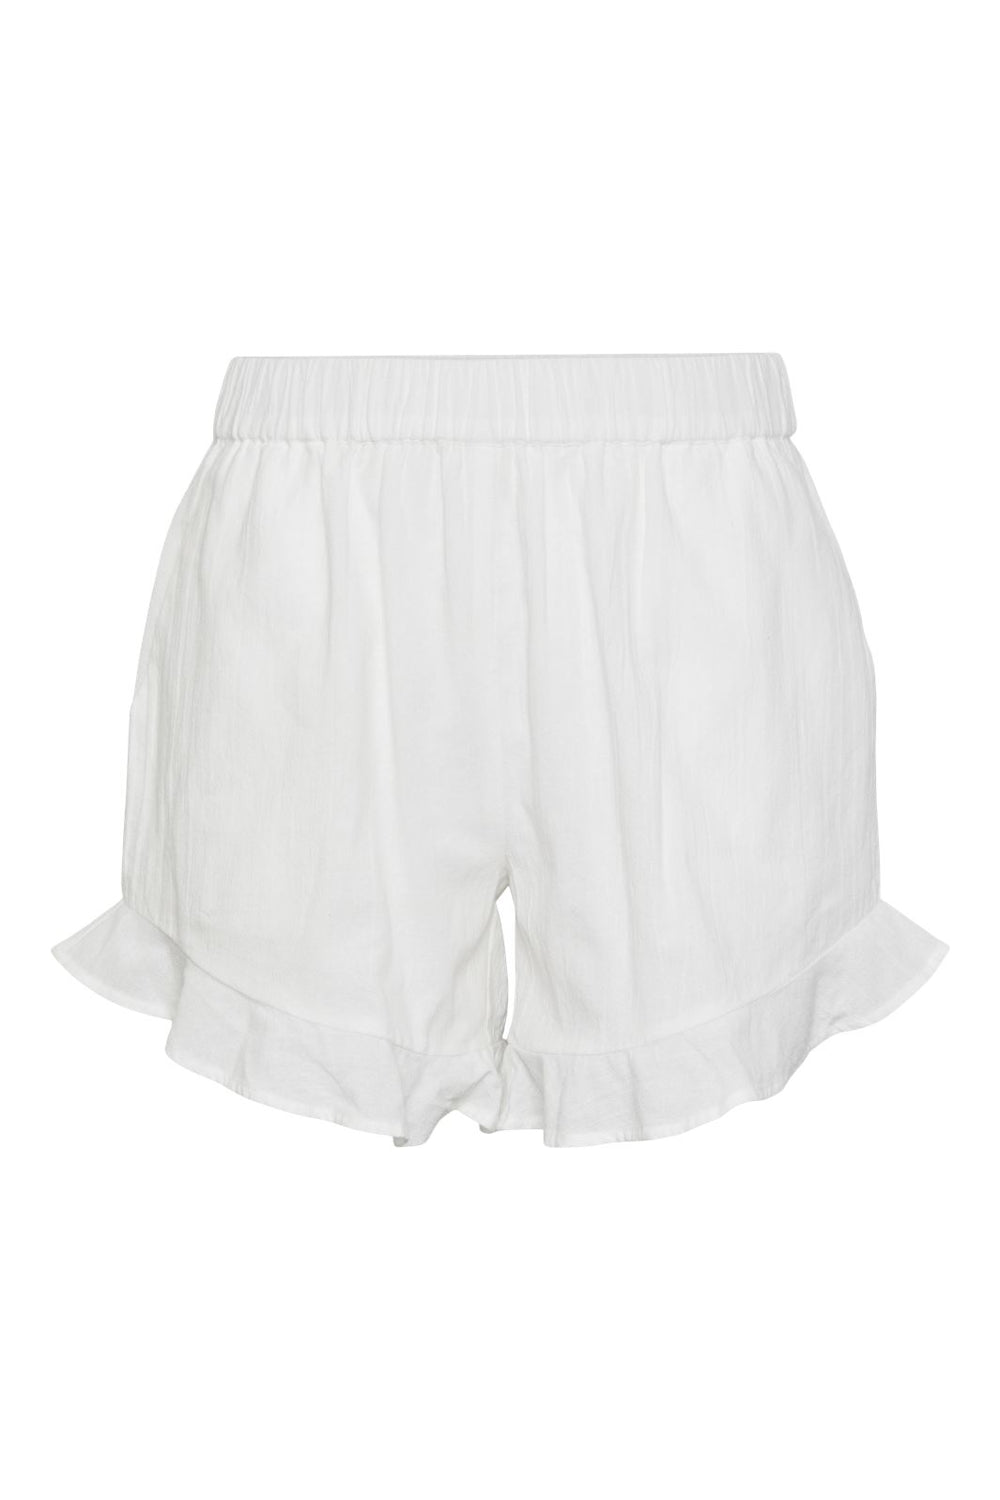 Pieces - Pcmilla Shorts - 4369877 Bright White